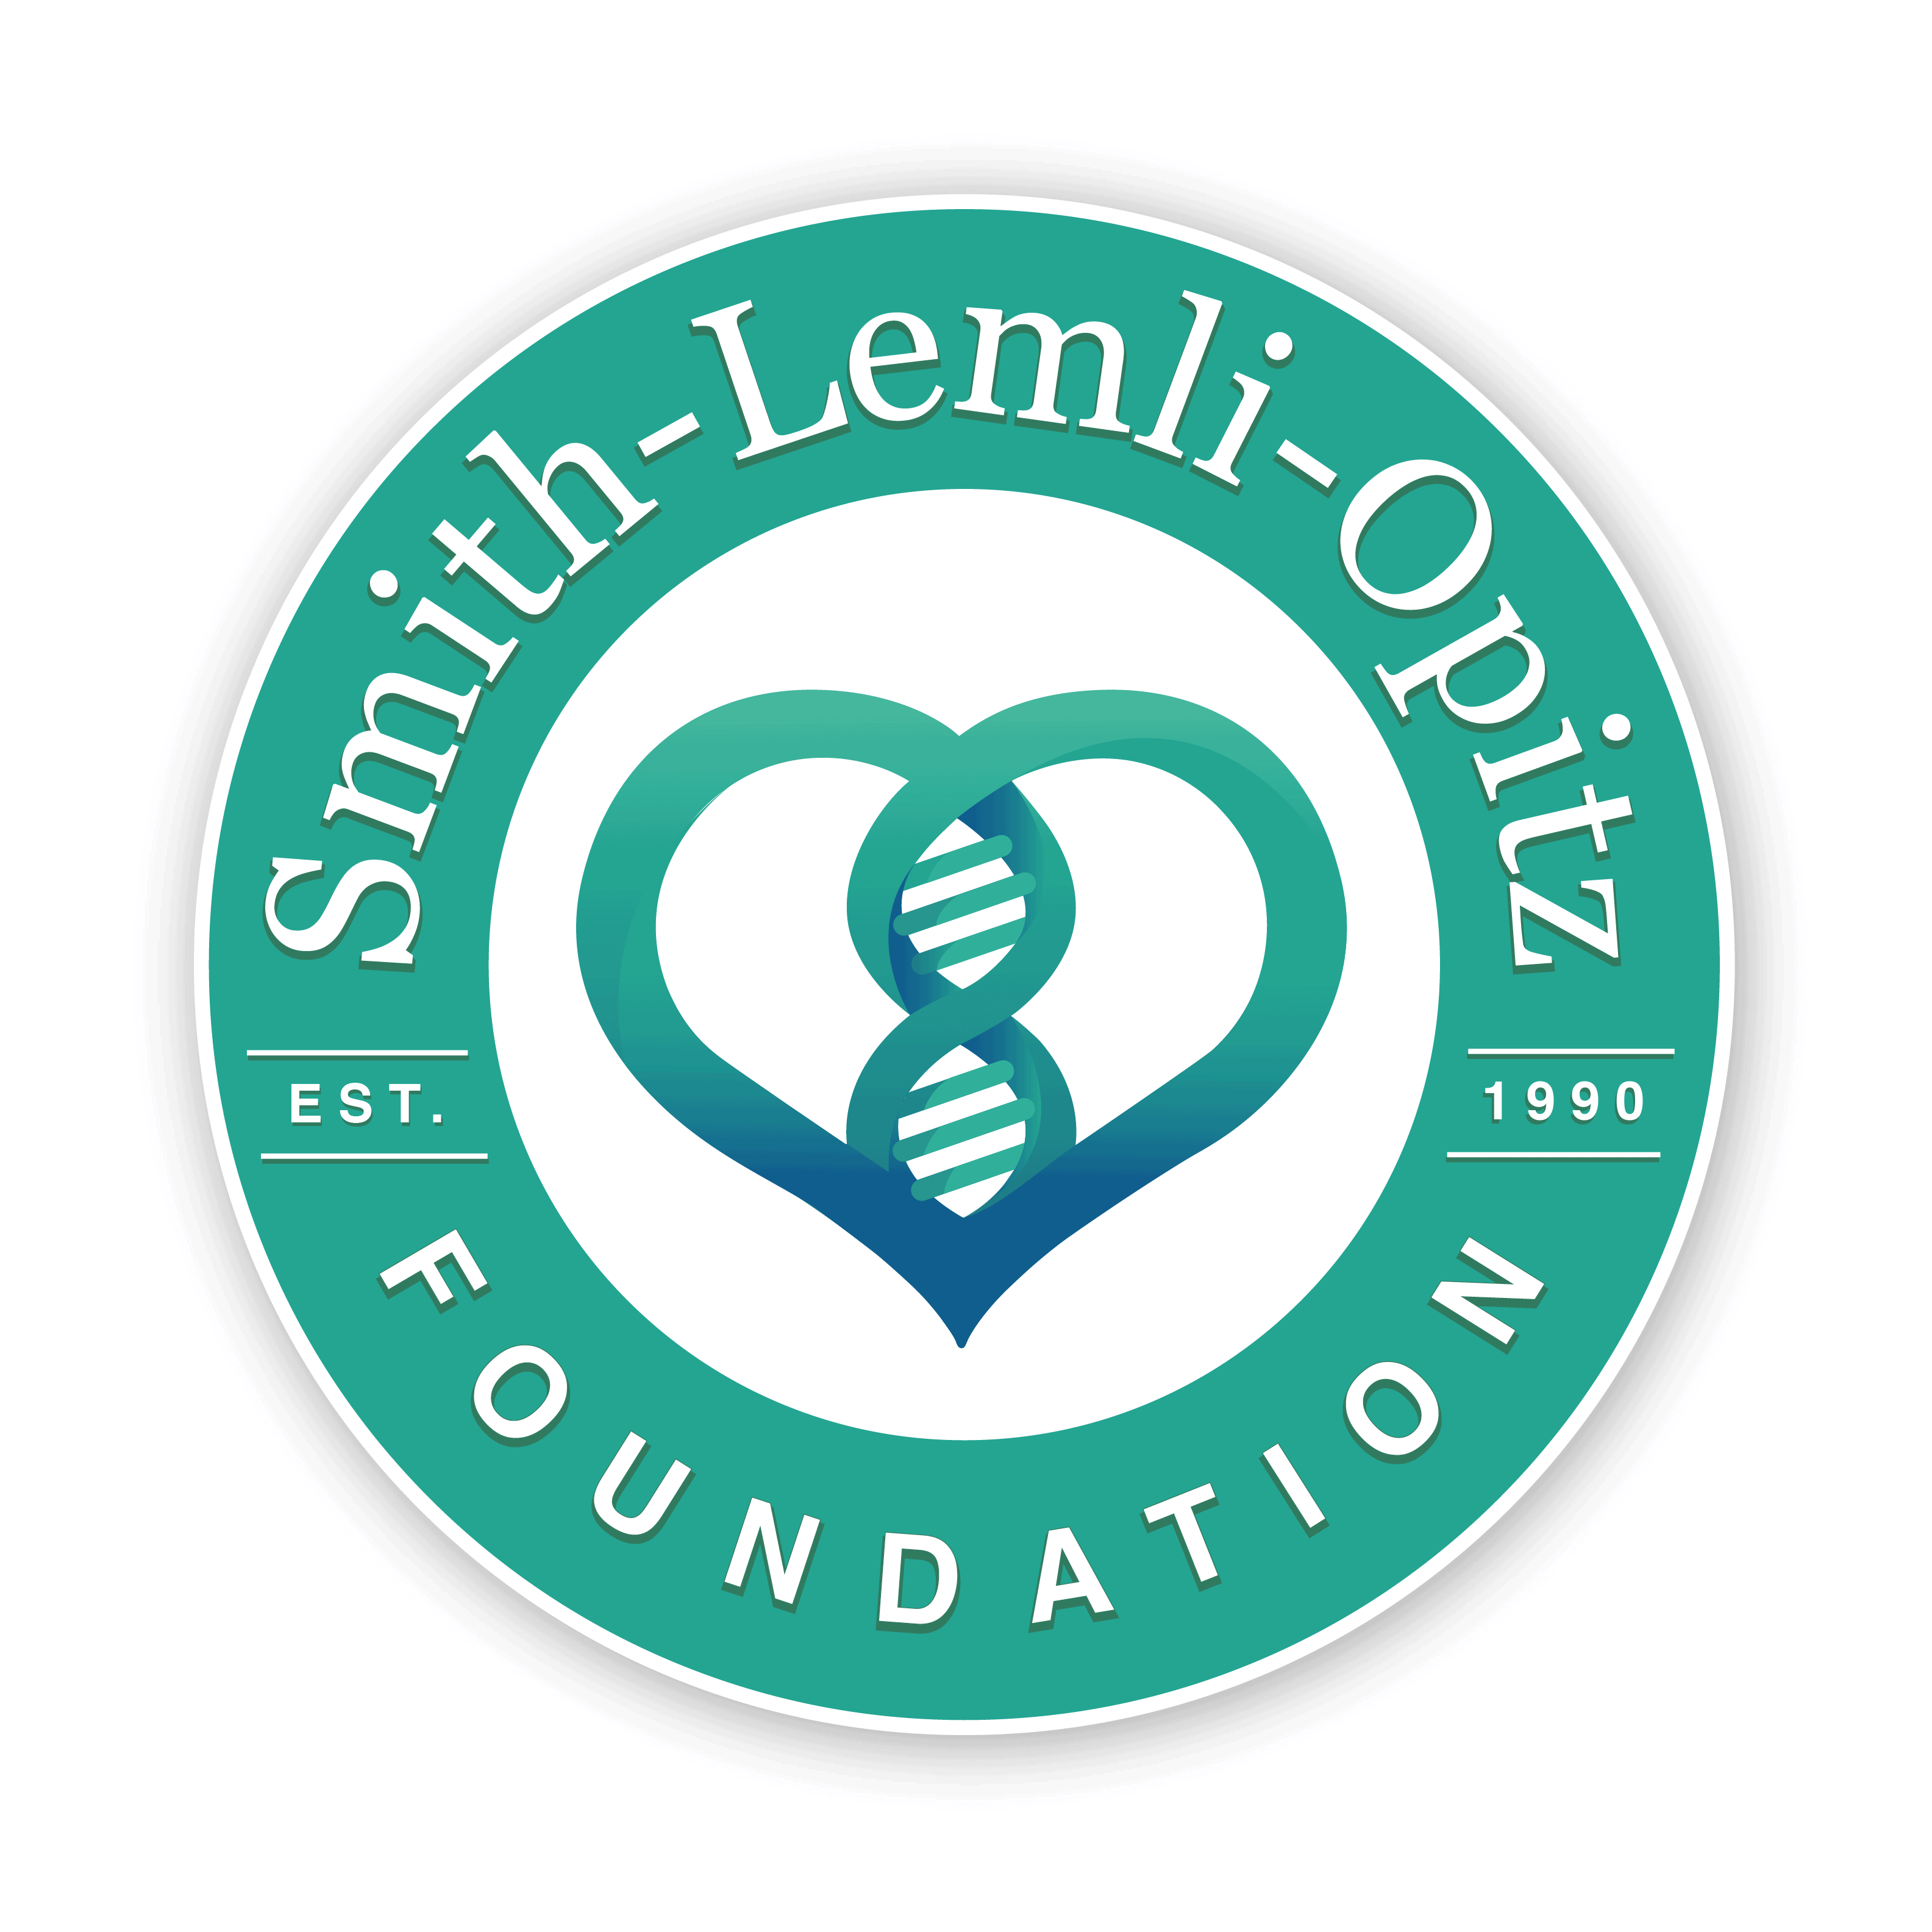 Smith-Lemli-Opitz Foundation